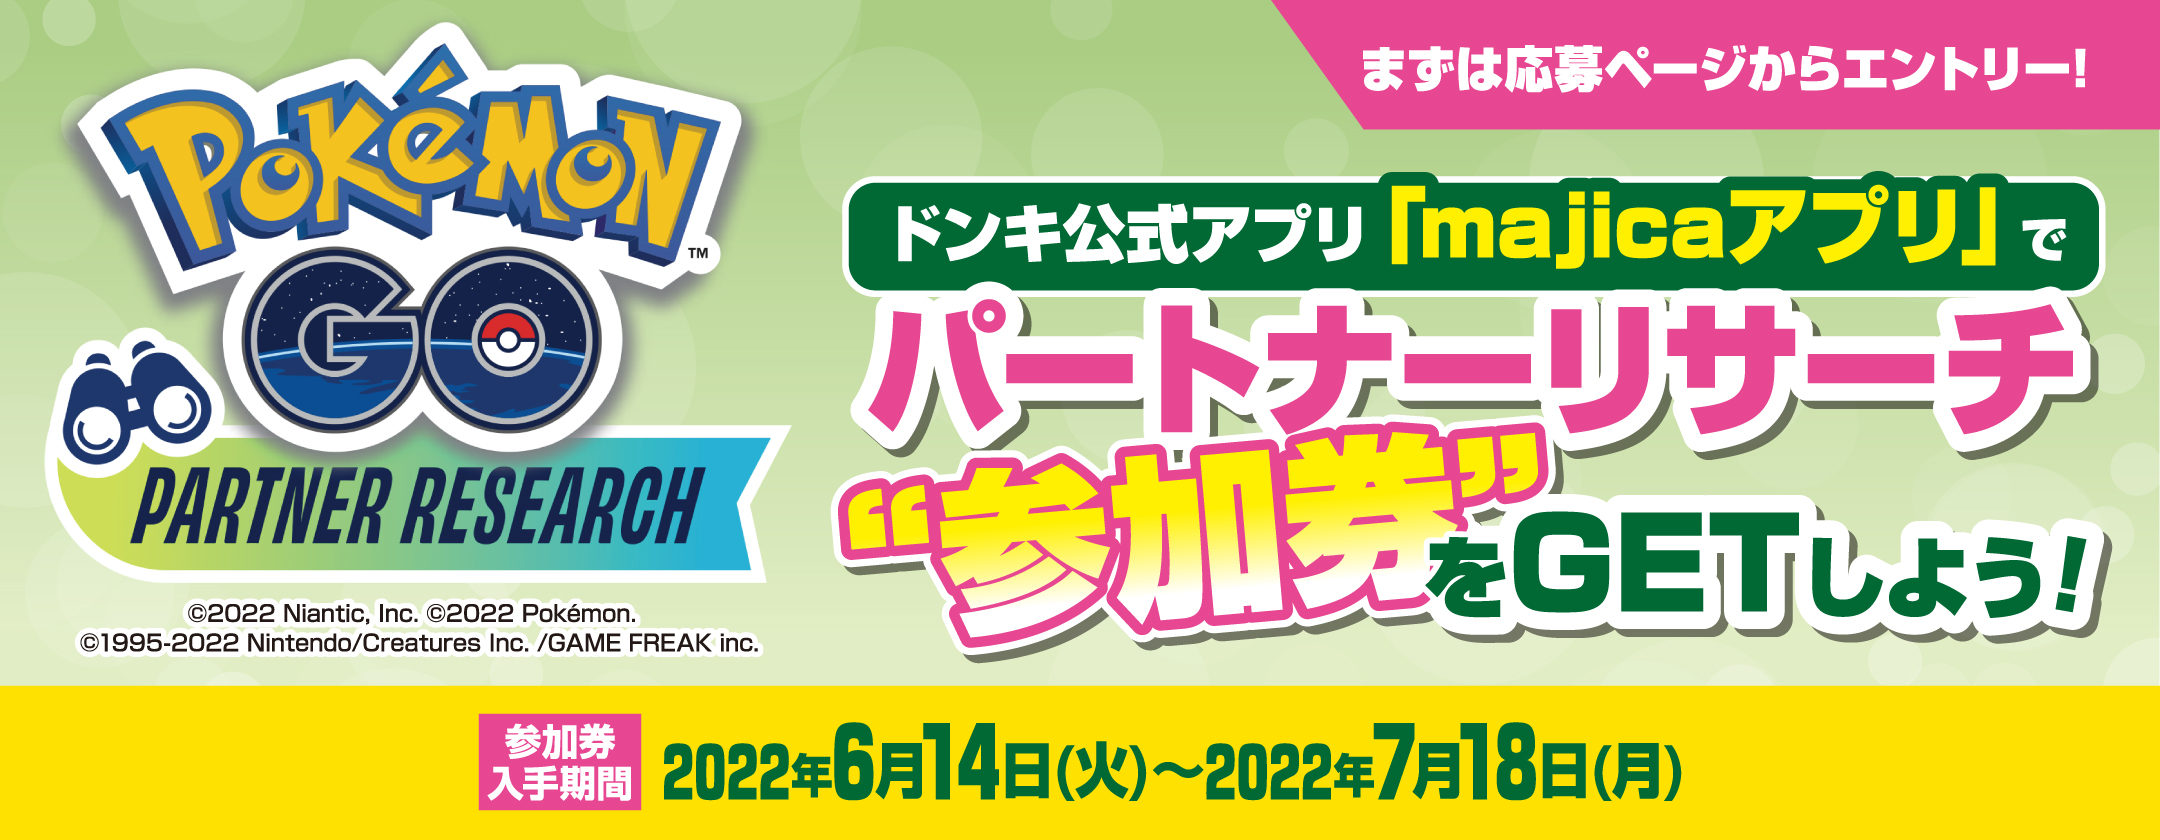 『majicaアプリ』で『Pokémon GO』パートナーリサーチ参加券をゲットしよう！